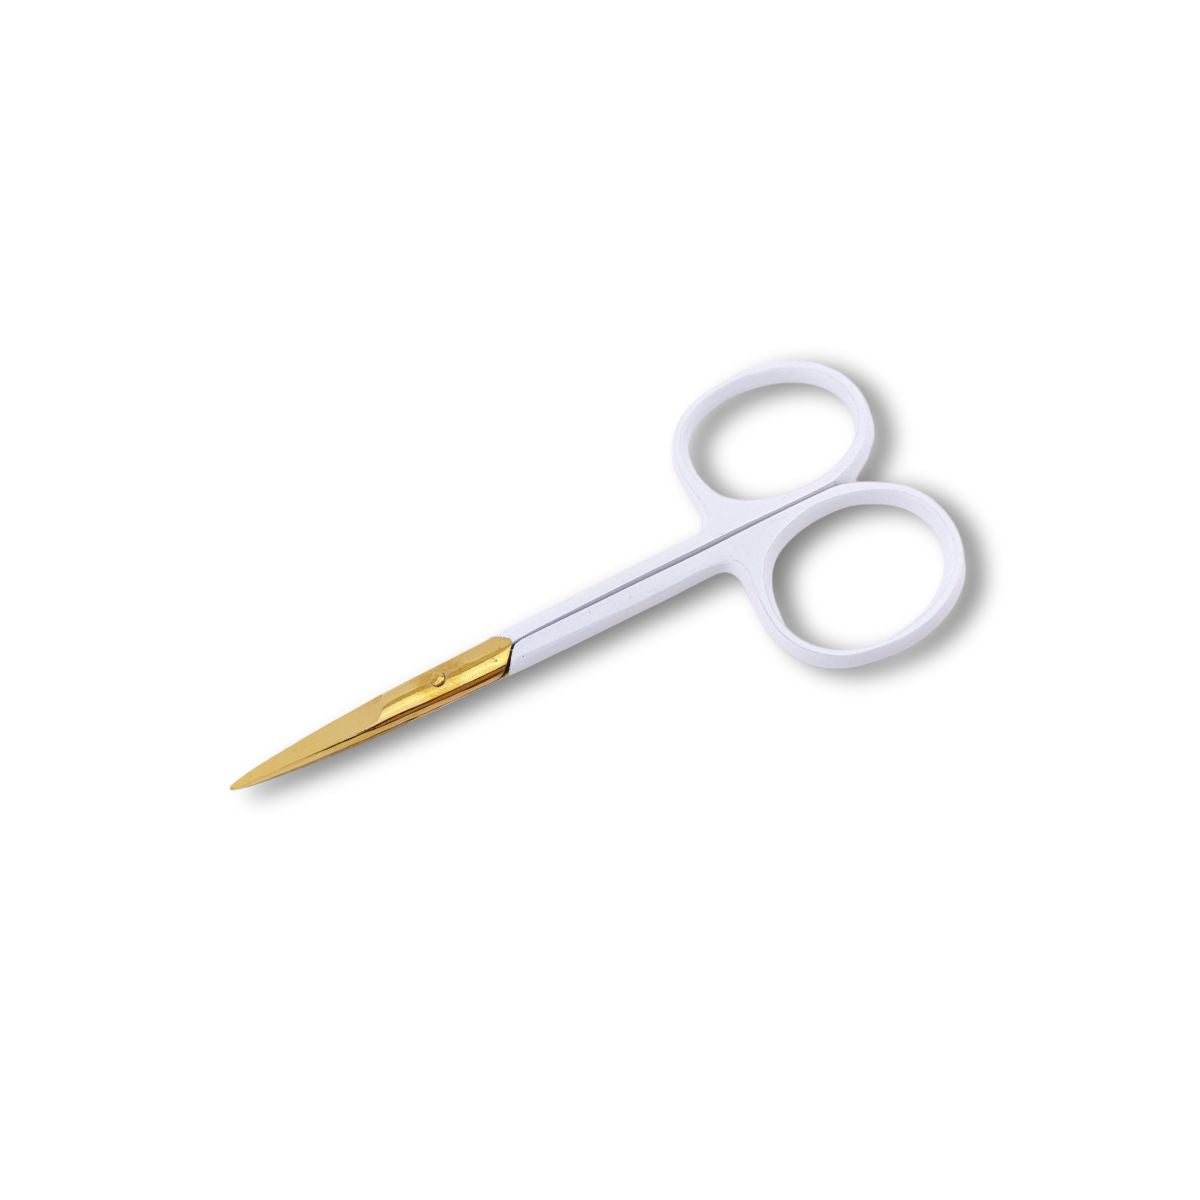 White & Gold Mini Scissors - My Lash Store